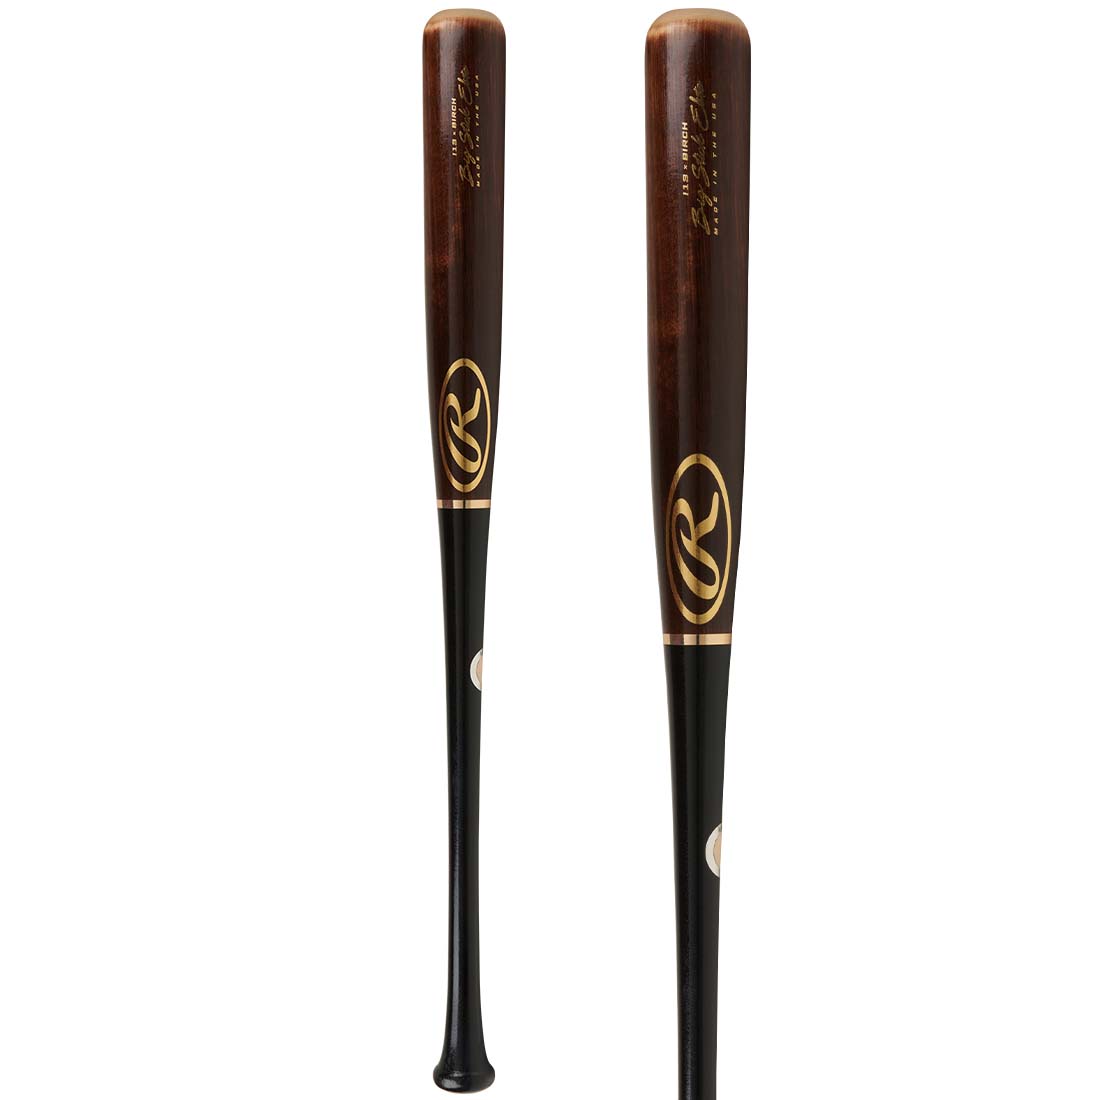 Used Louisville Slugger I13 33 1/2 Wood Bats Wood Bats